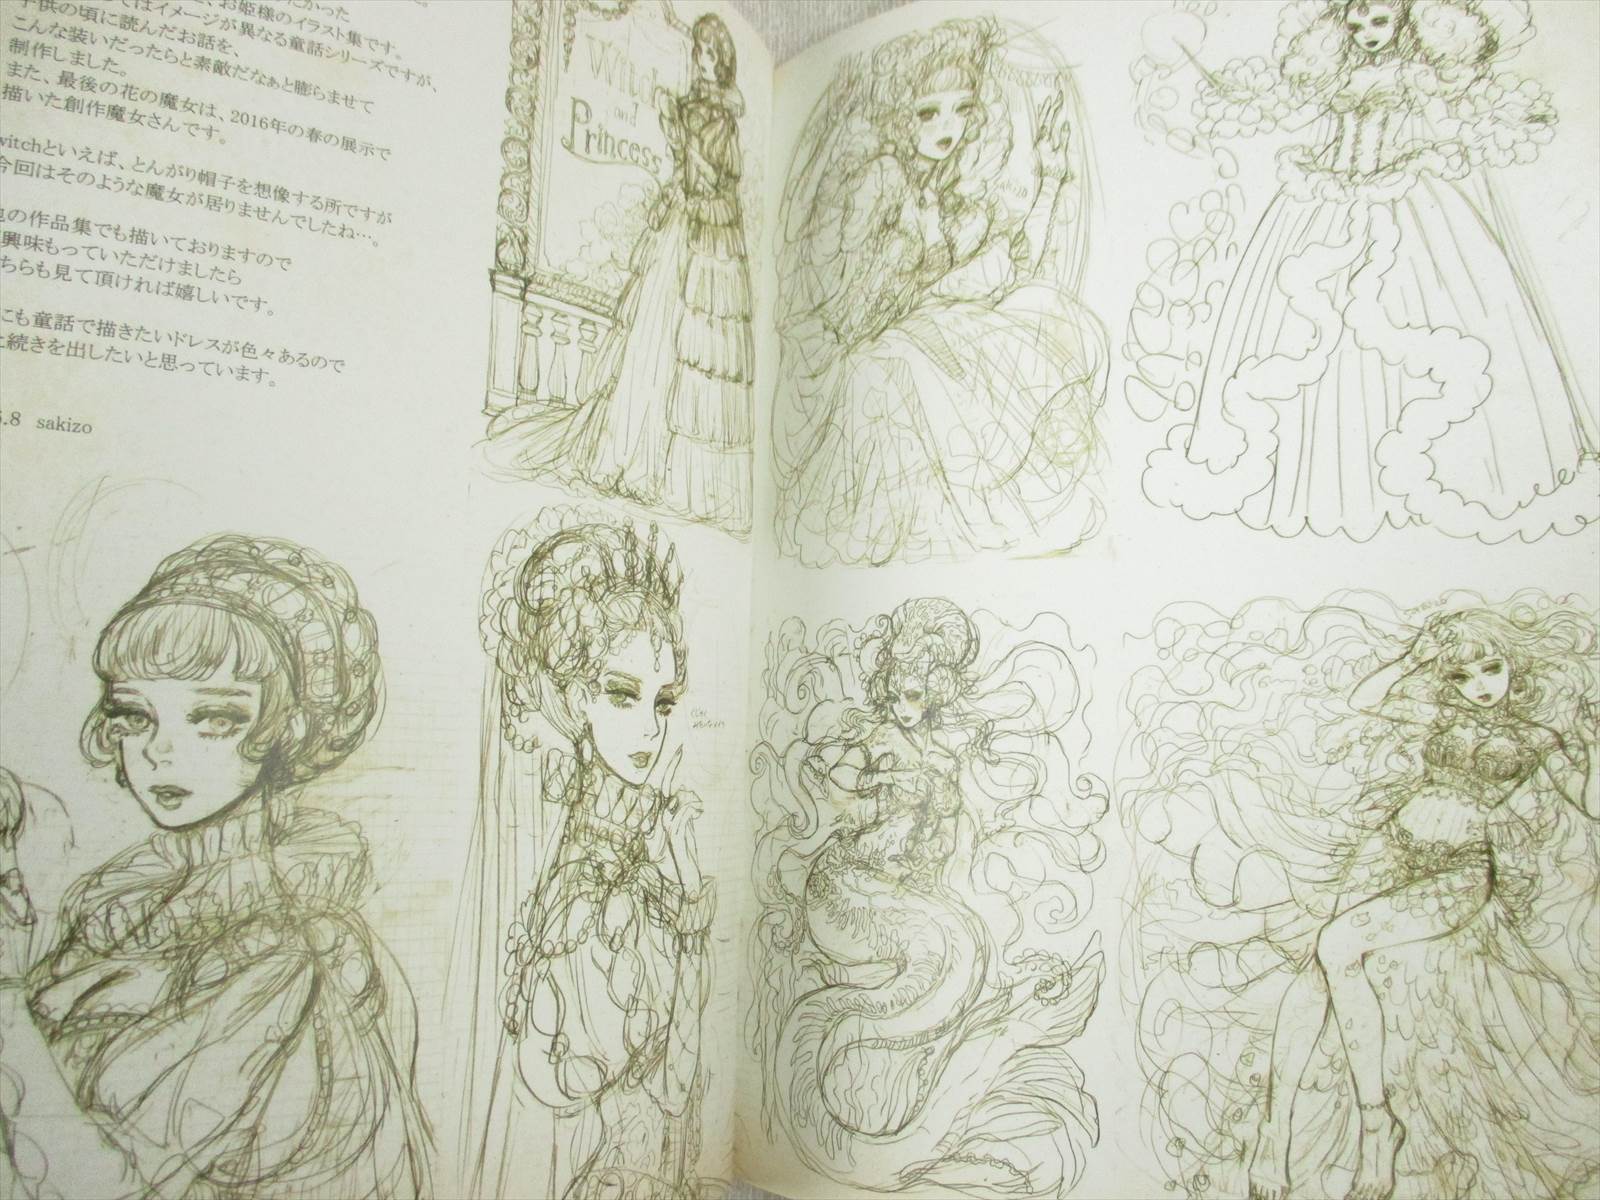 Sakizo Art Illustration Witch And Princess Doujin Booklet Book Ltd Ebay